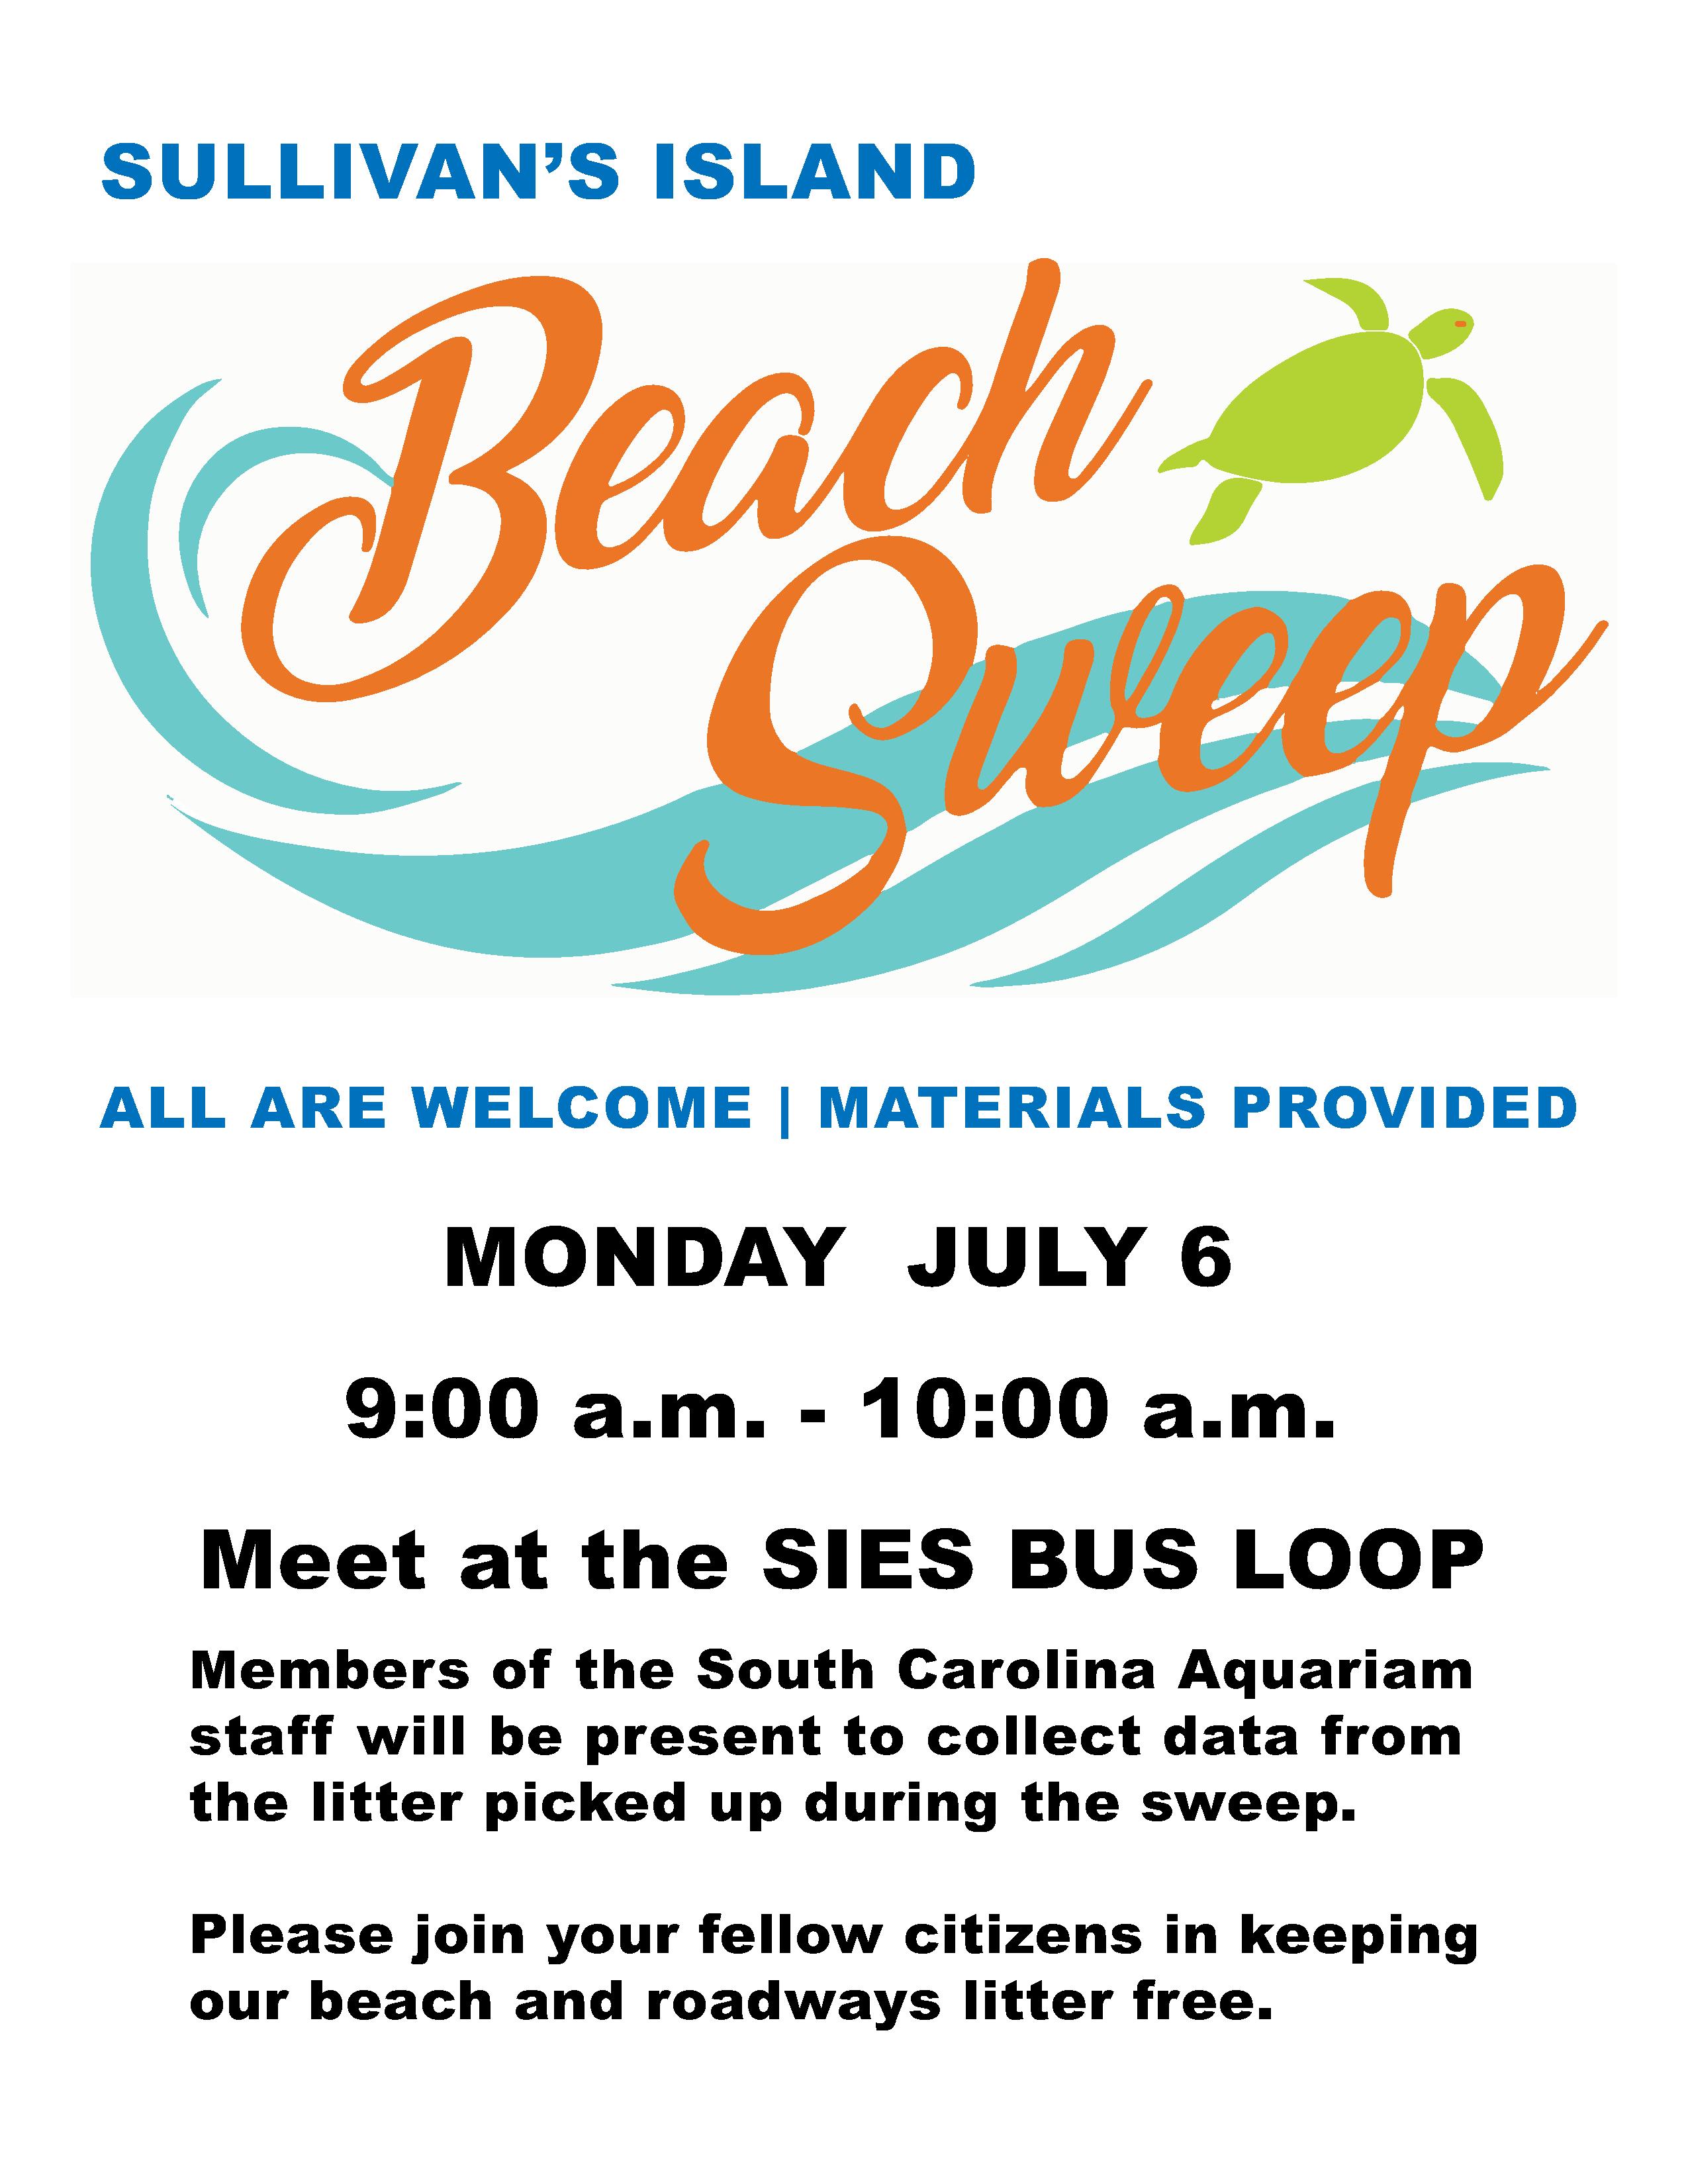 Beach Sweep Details (Pic)